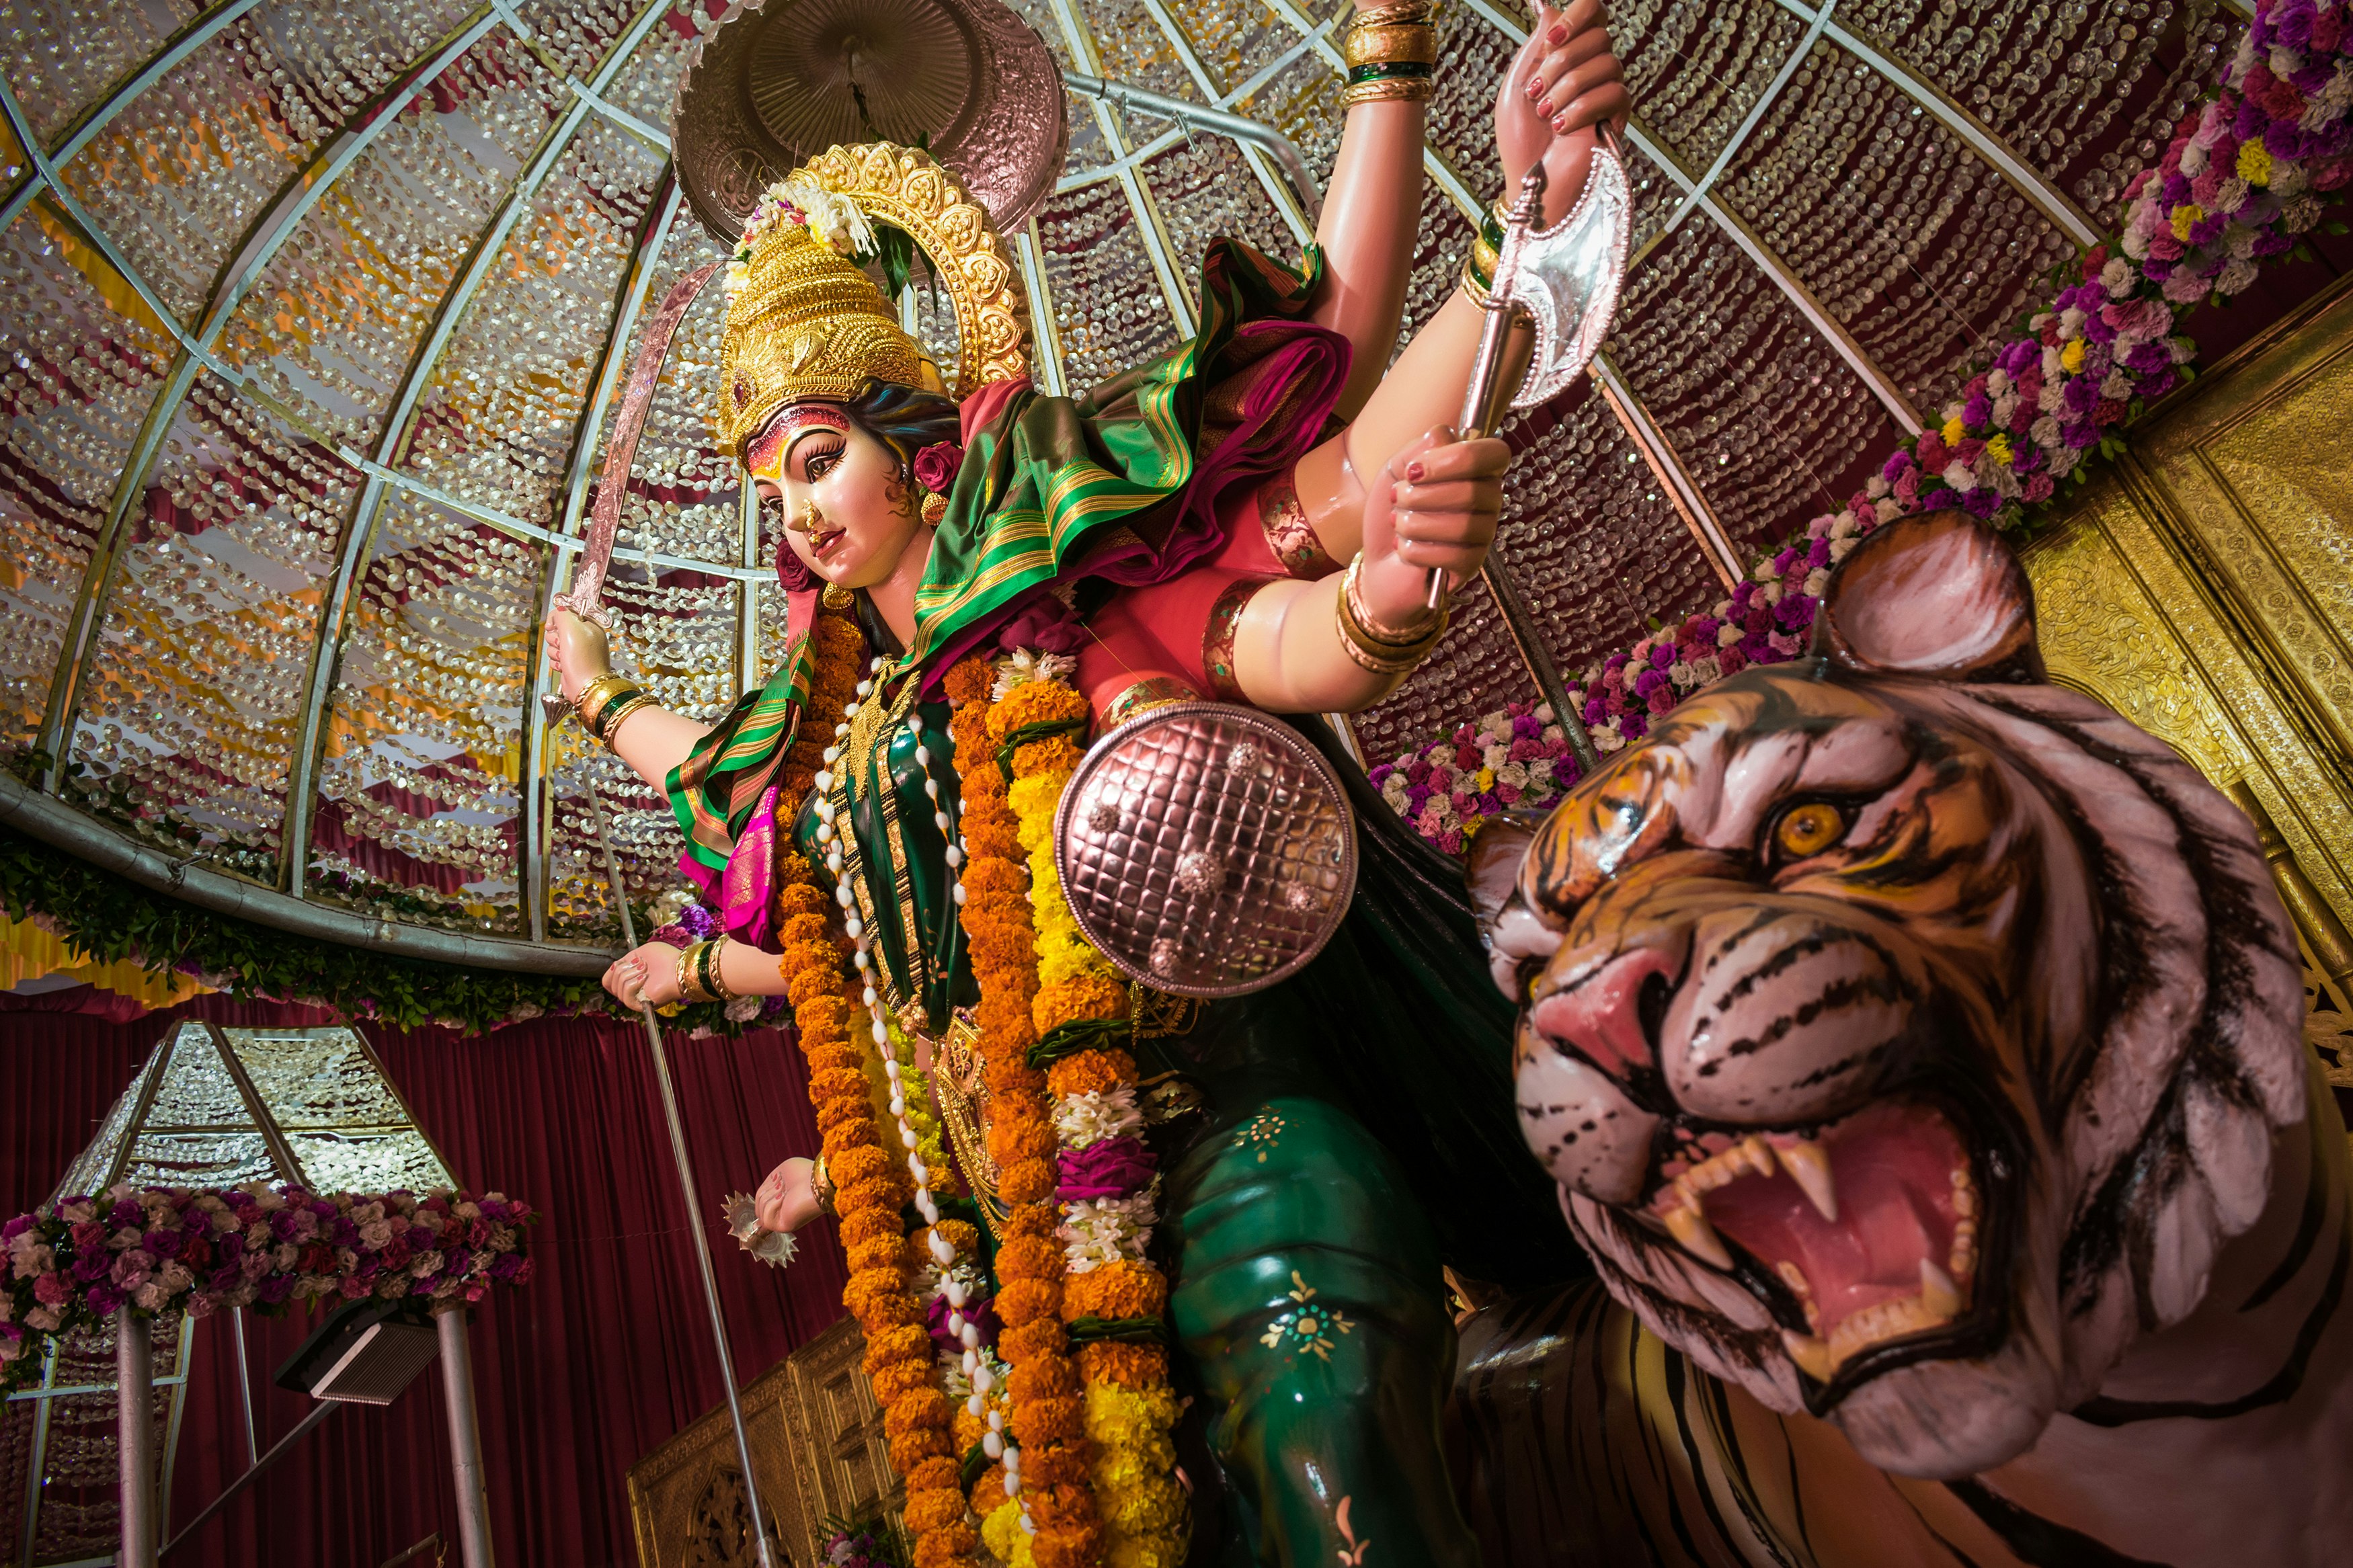 An idol of Maa Durga Devi at a temple in Mumbai, India during Navratri 2019